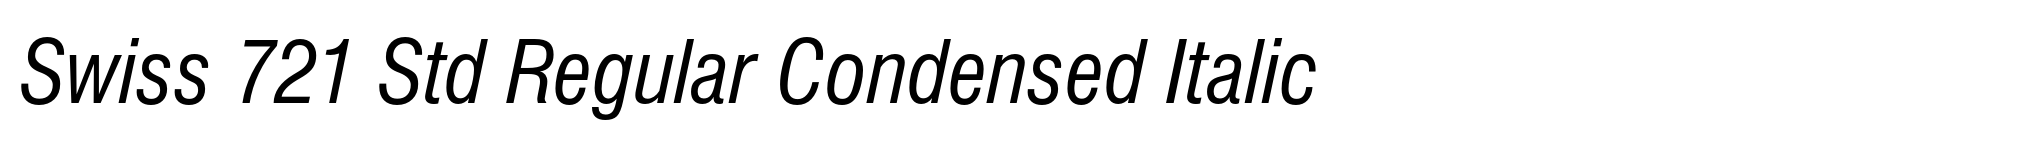 Swiss 721 Std Regular Condensed Italic image